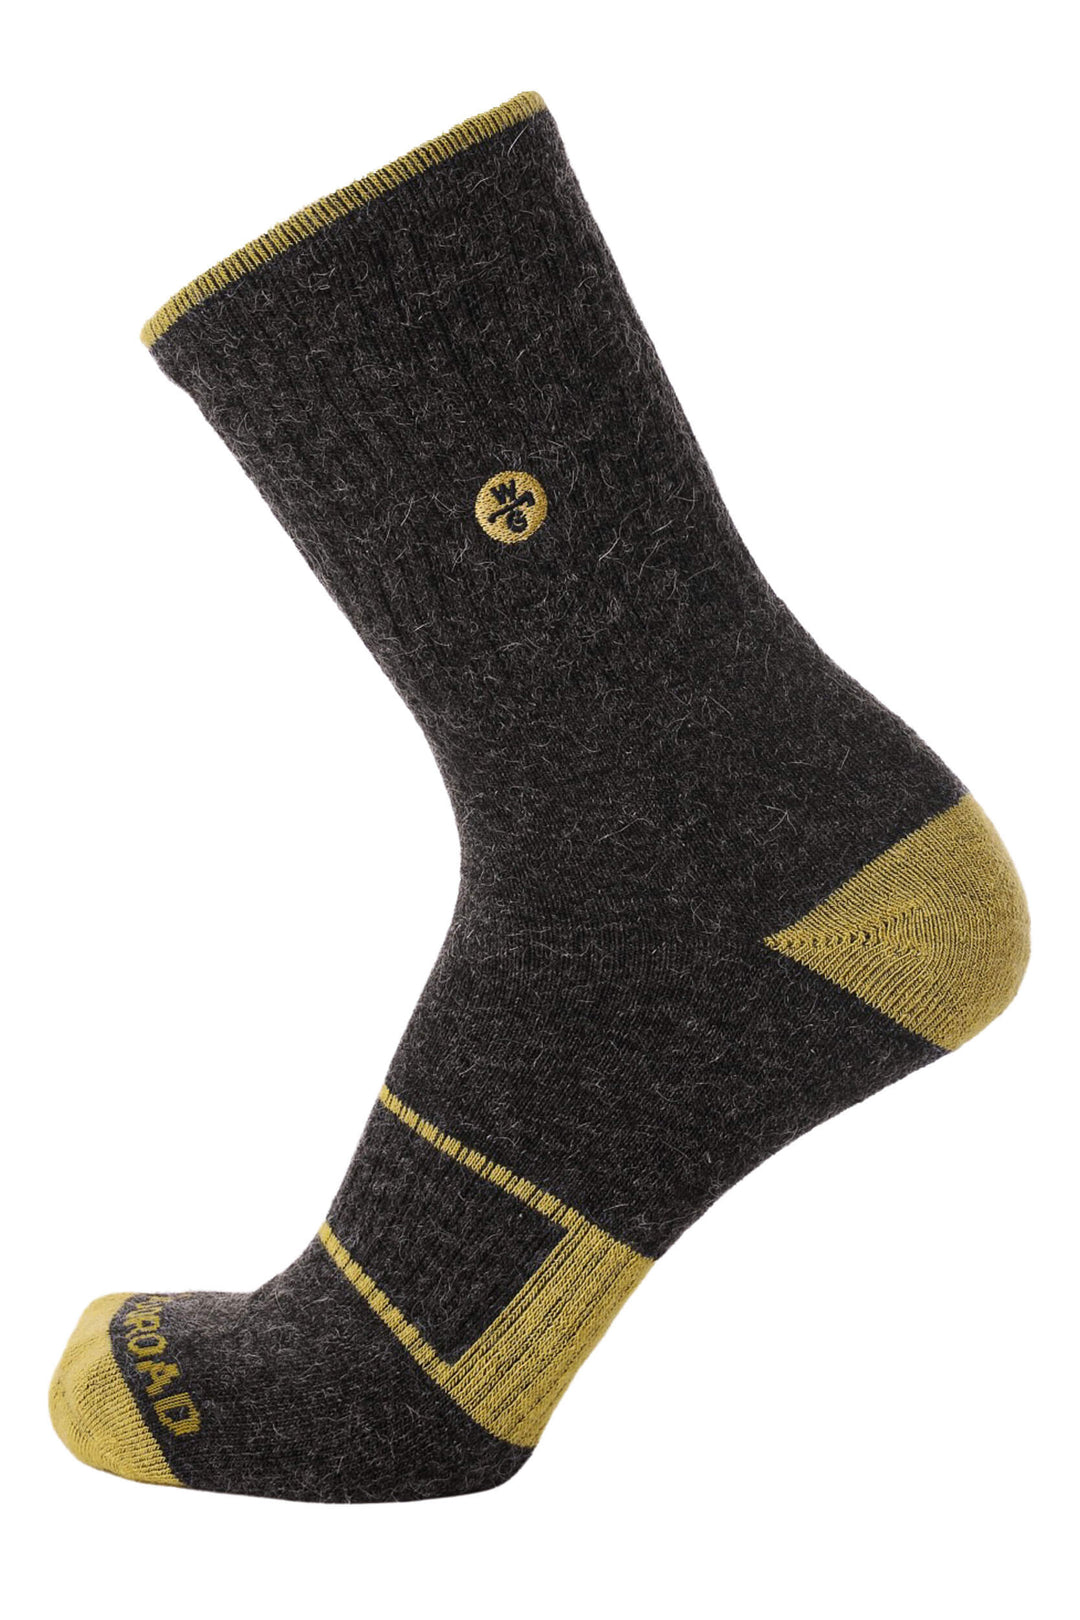 Nada Llama Crew Sock Bundle - Granite/Yellow - Woodroad Gear Co.